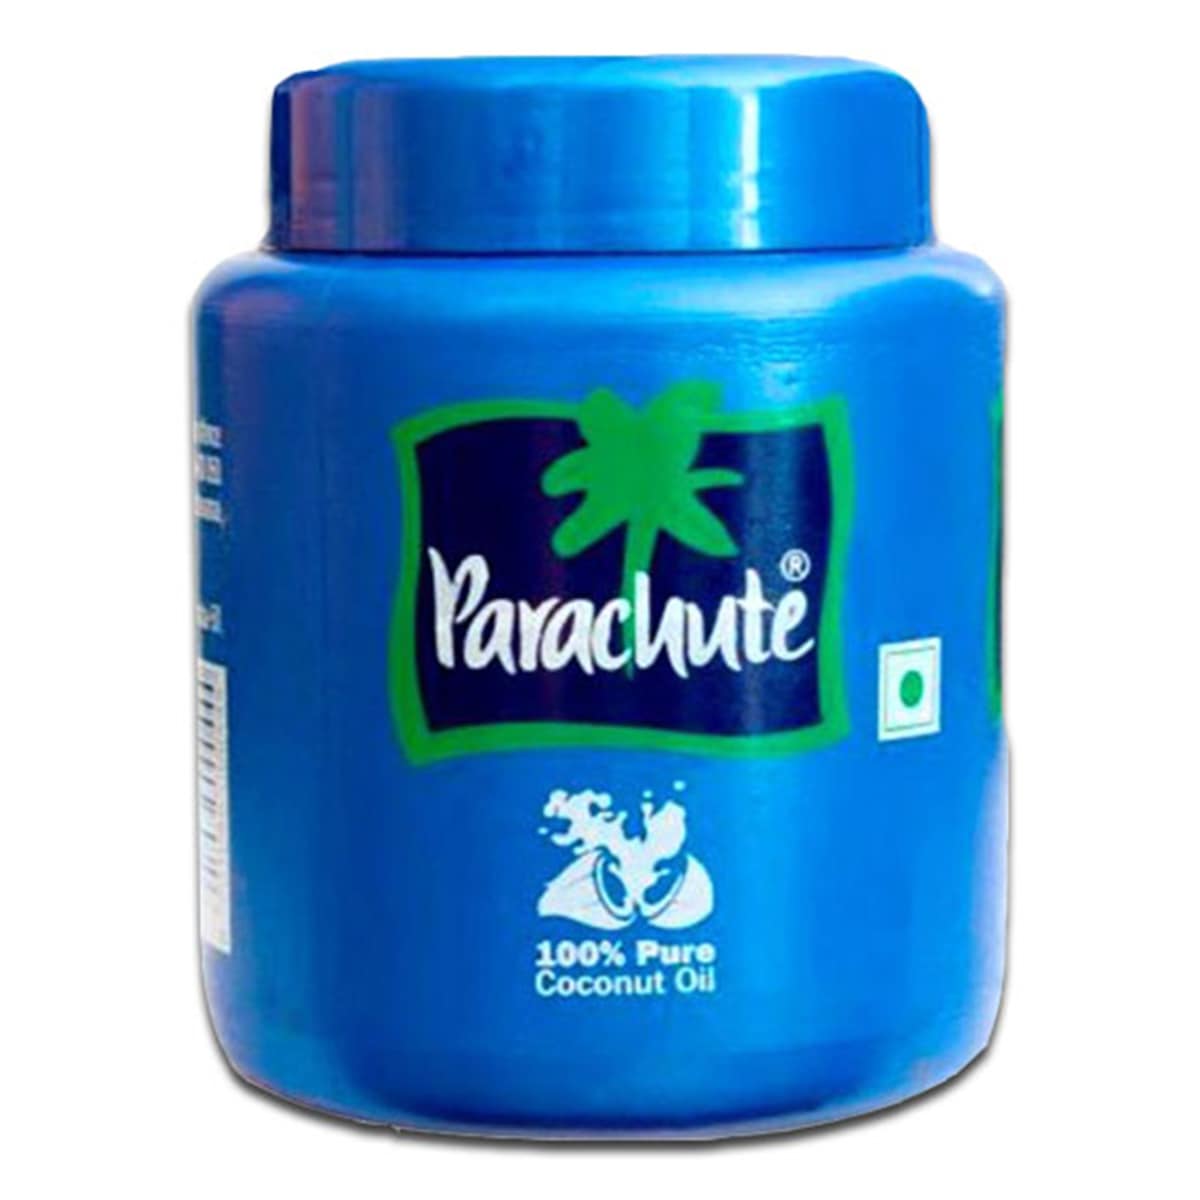 Buy Parachute 100% Pure Coconut Oil - 500 ml